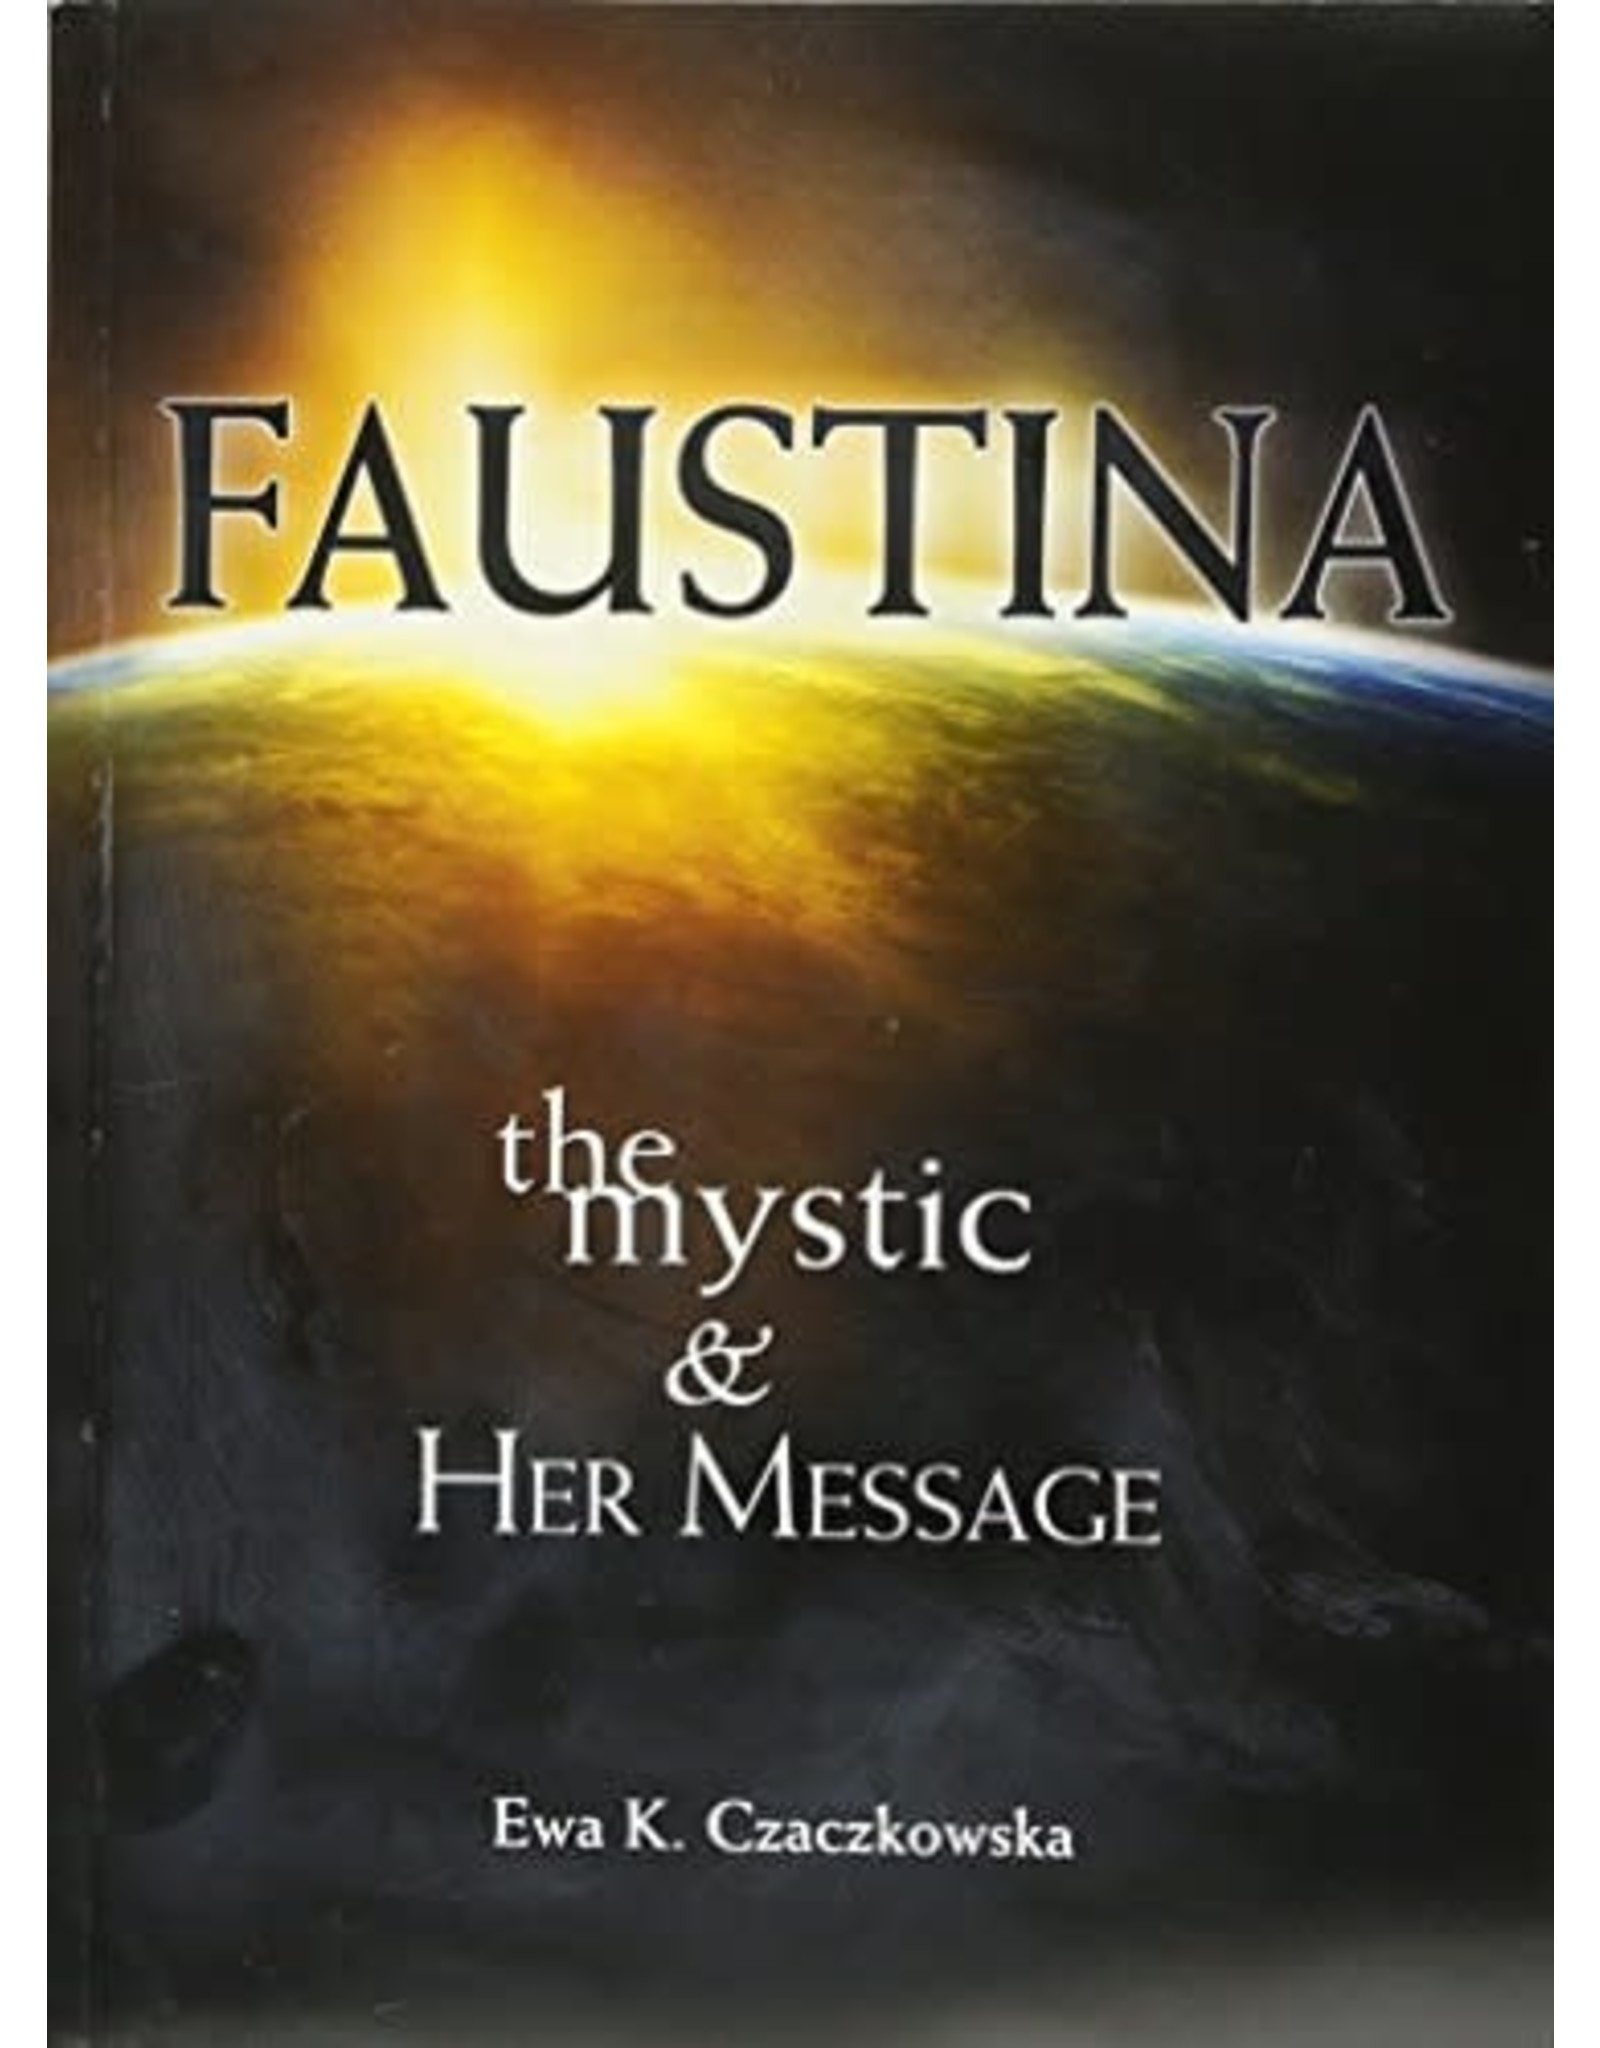 Association of Marian Helpers Faustina: The Mystic & Her Message by Ewa K. Czaczkowska (Paperback)